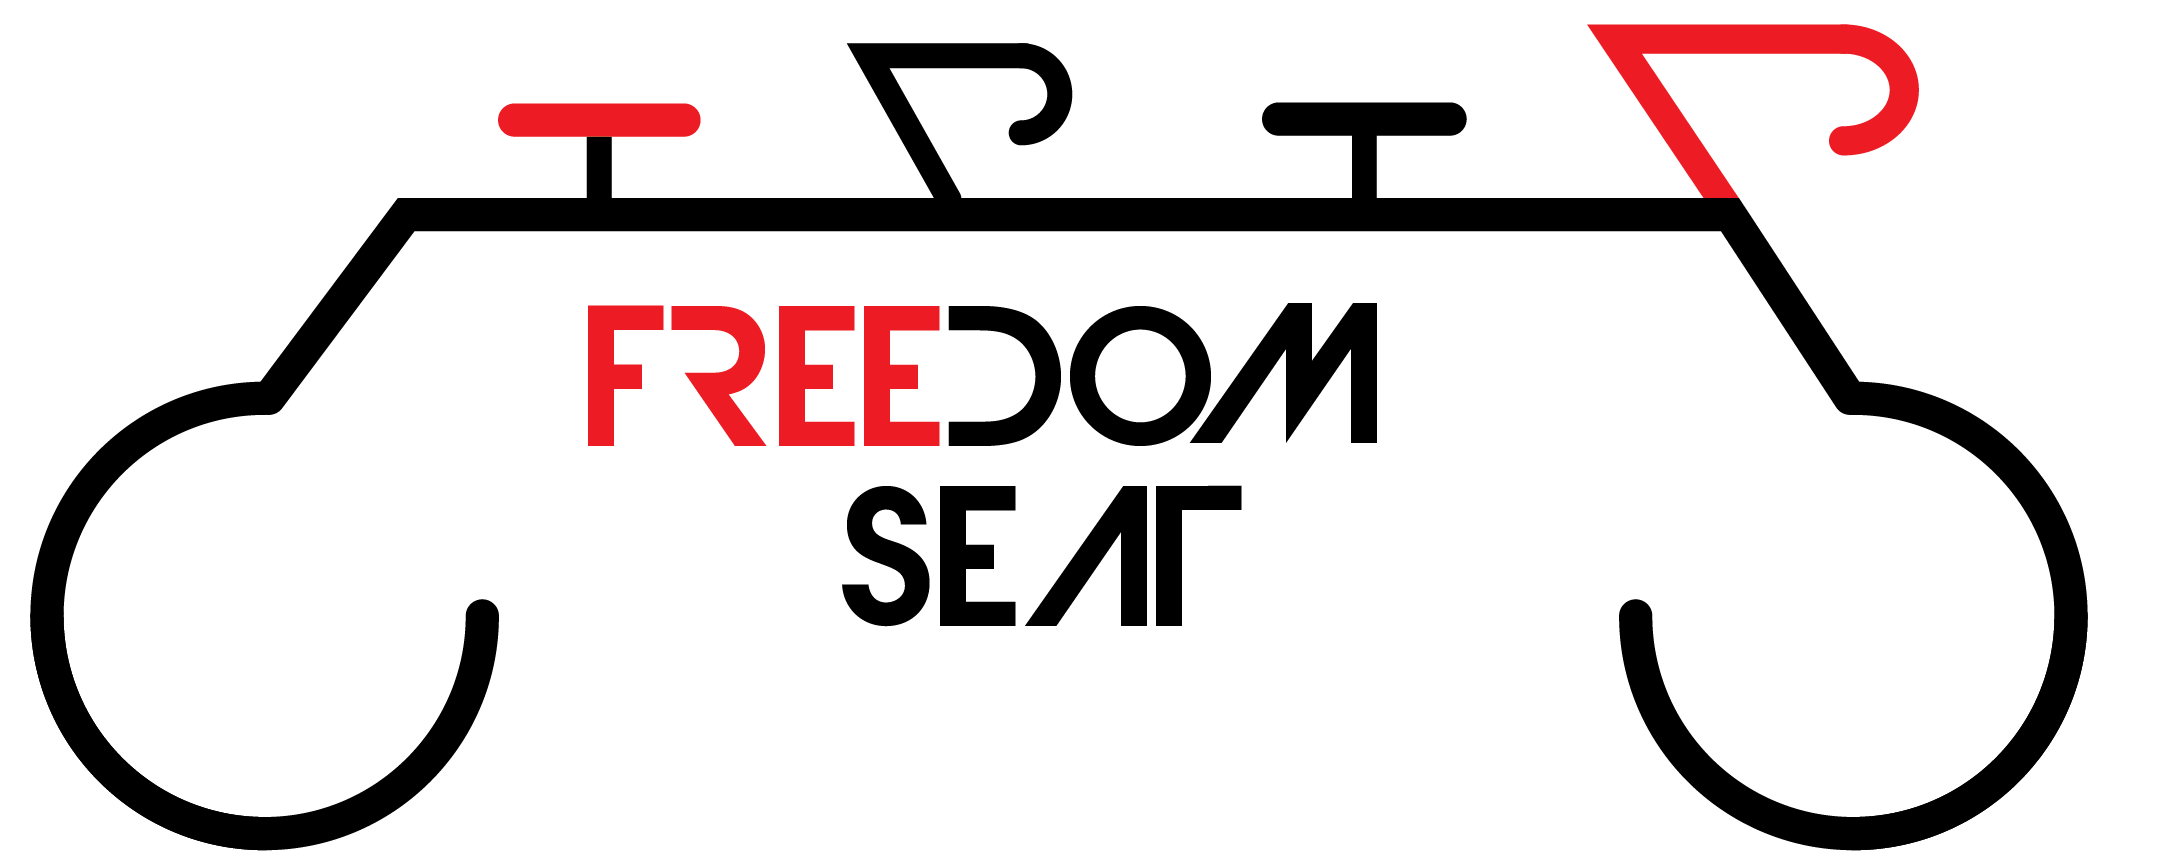 Freedom Seat